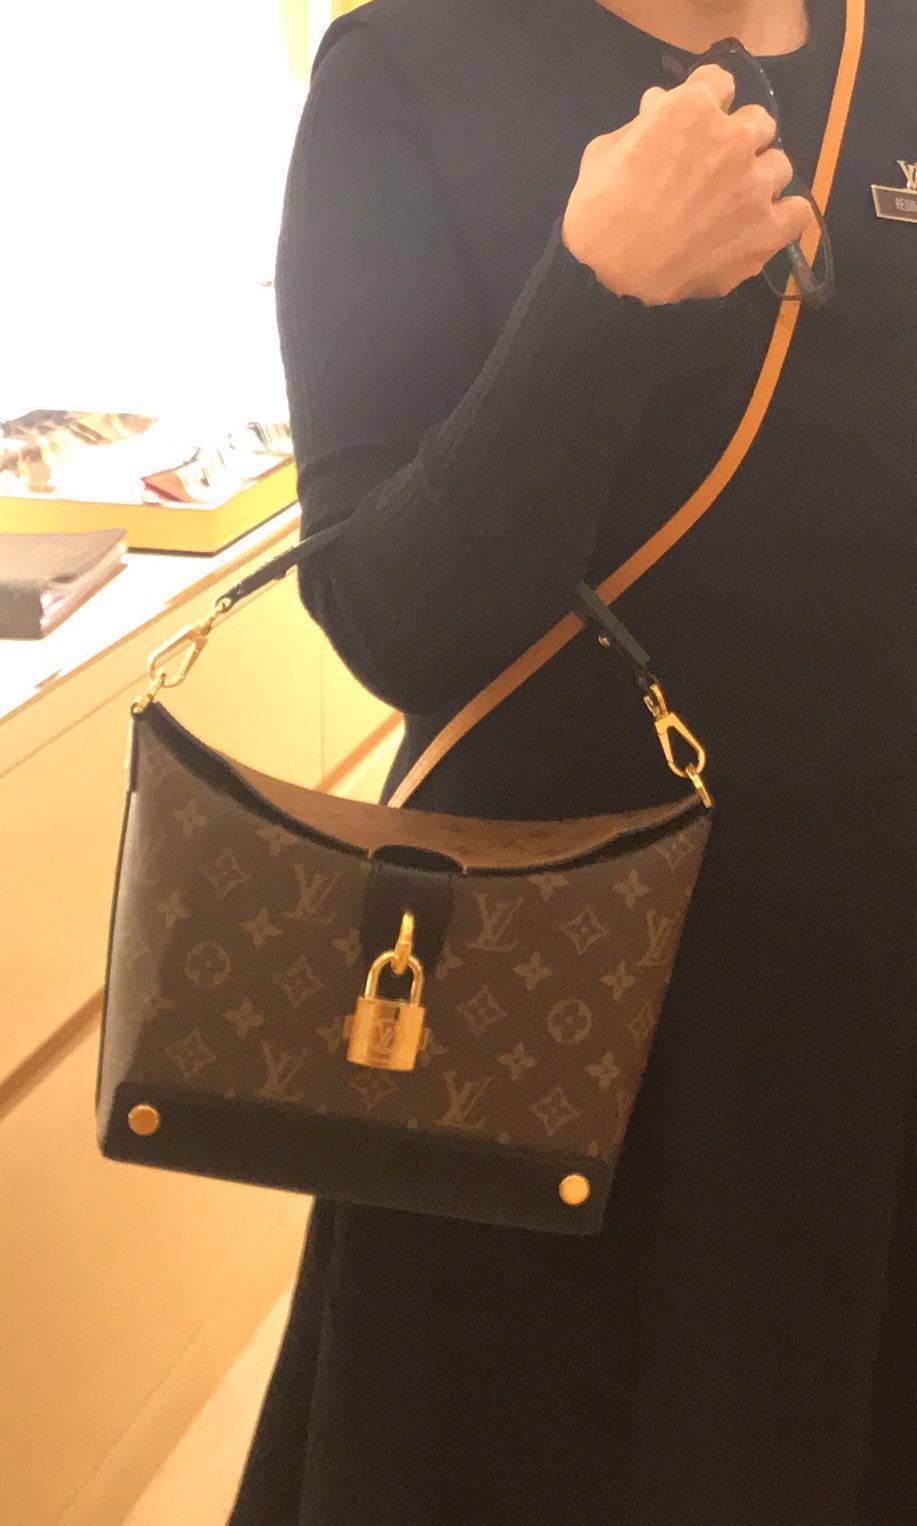 Bento Box  Rent A Louis Vuitton Handbag at Luxury Fashion Rentals